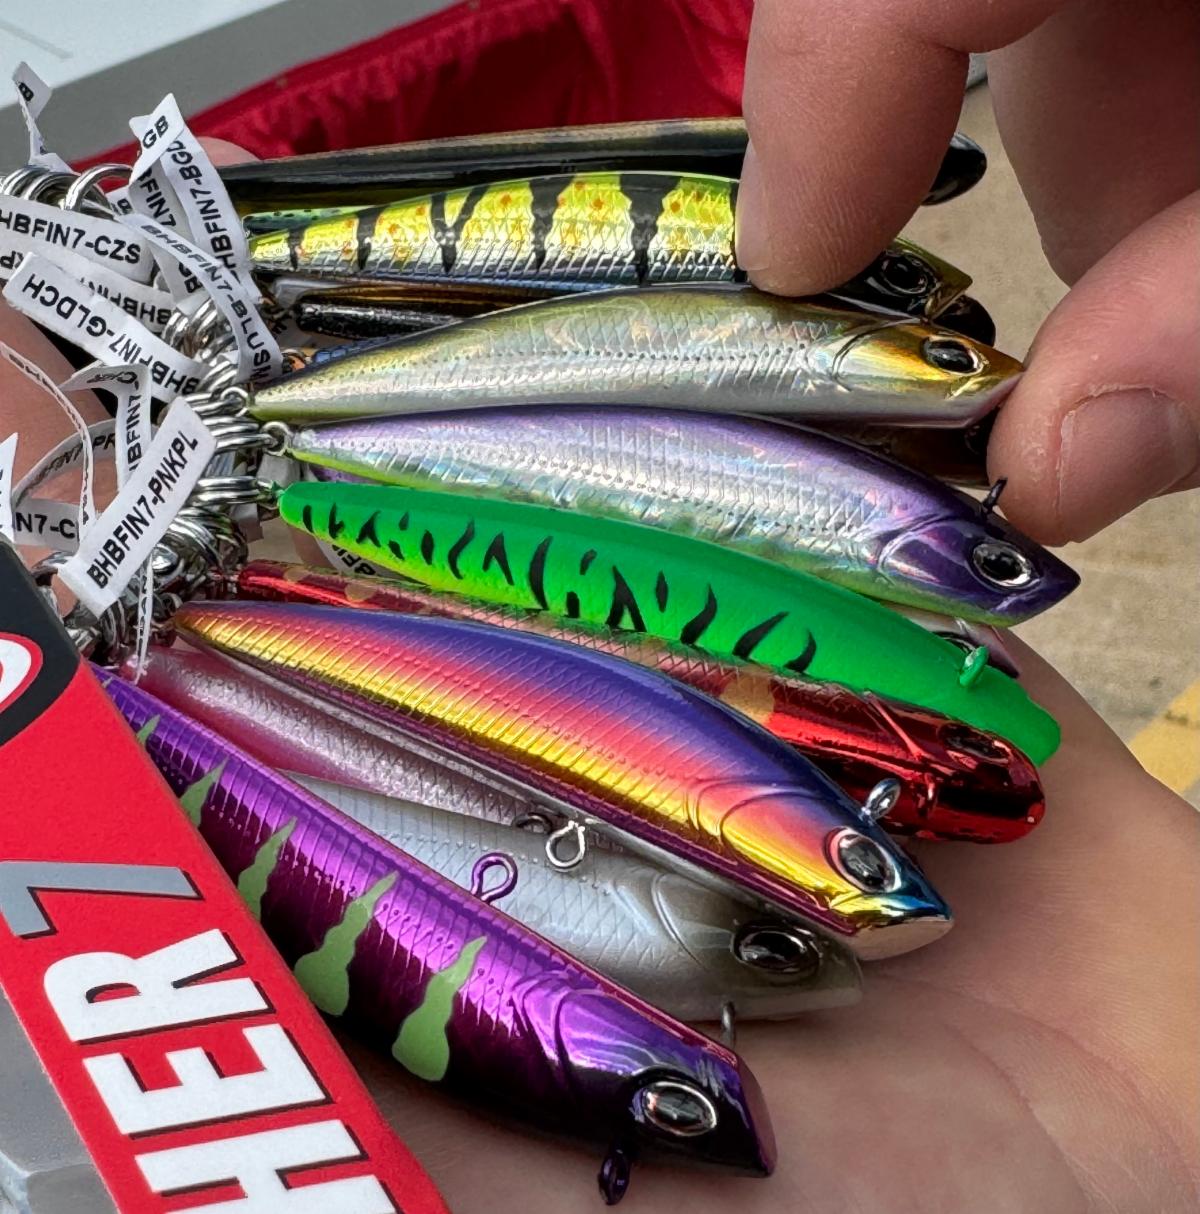 Cool new FFS baits, Jason Mitchell's night bite tricks, Lake trout